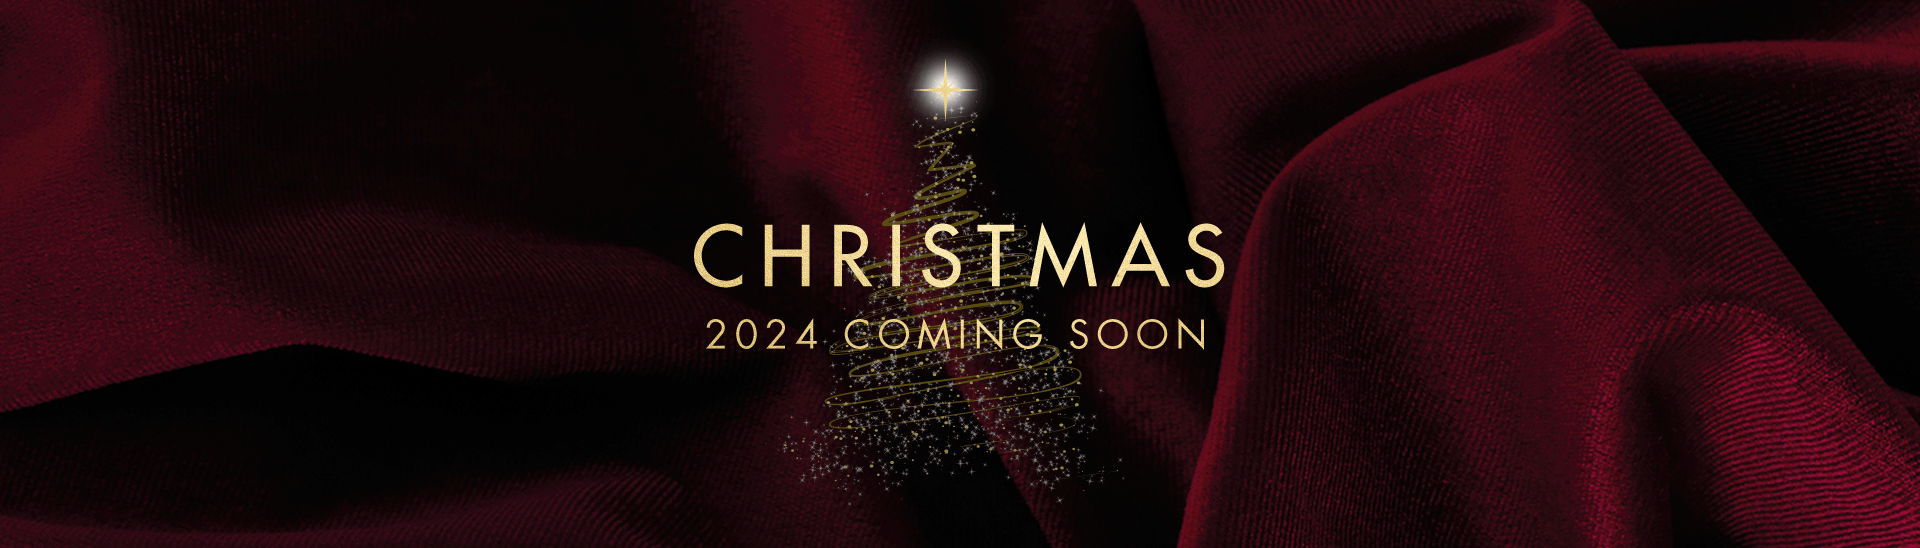 Christmas 2024 at Weston-Super-Mare